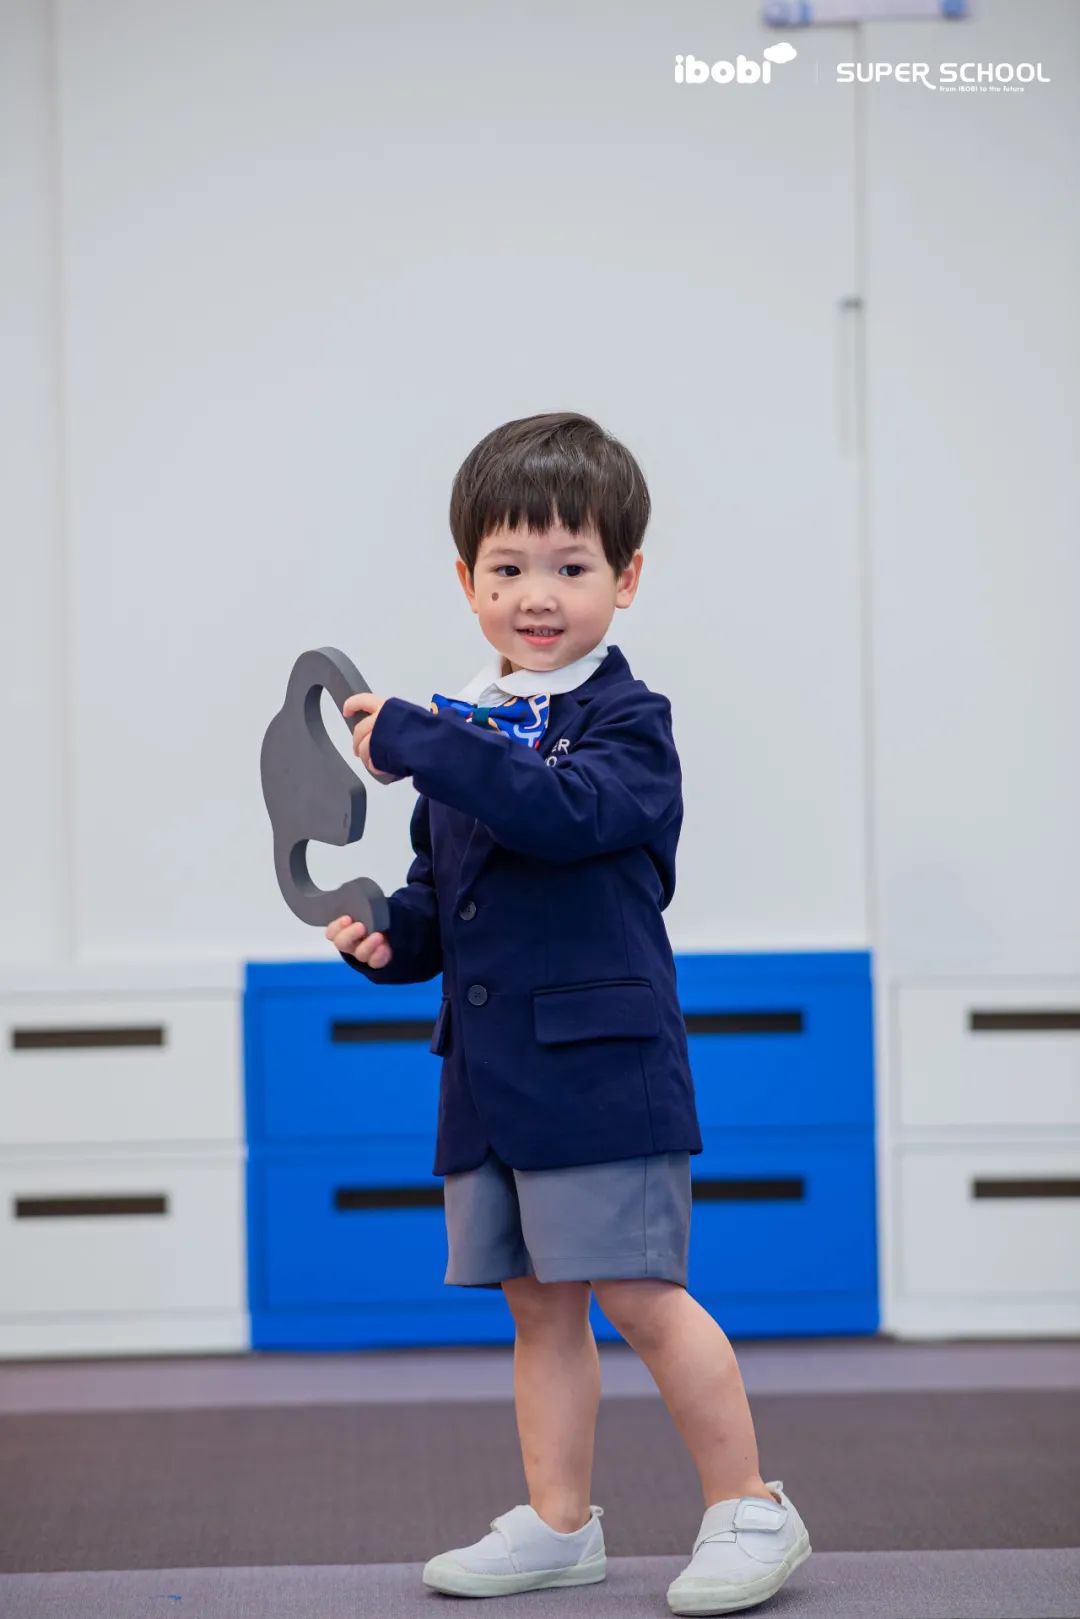 IBOBI SUPER SCHOOL系列校服亮相：既是贴身服饰，亦是成长伙伴